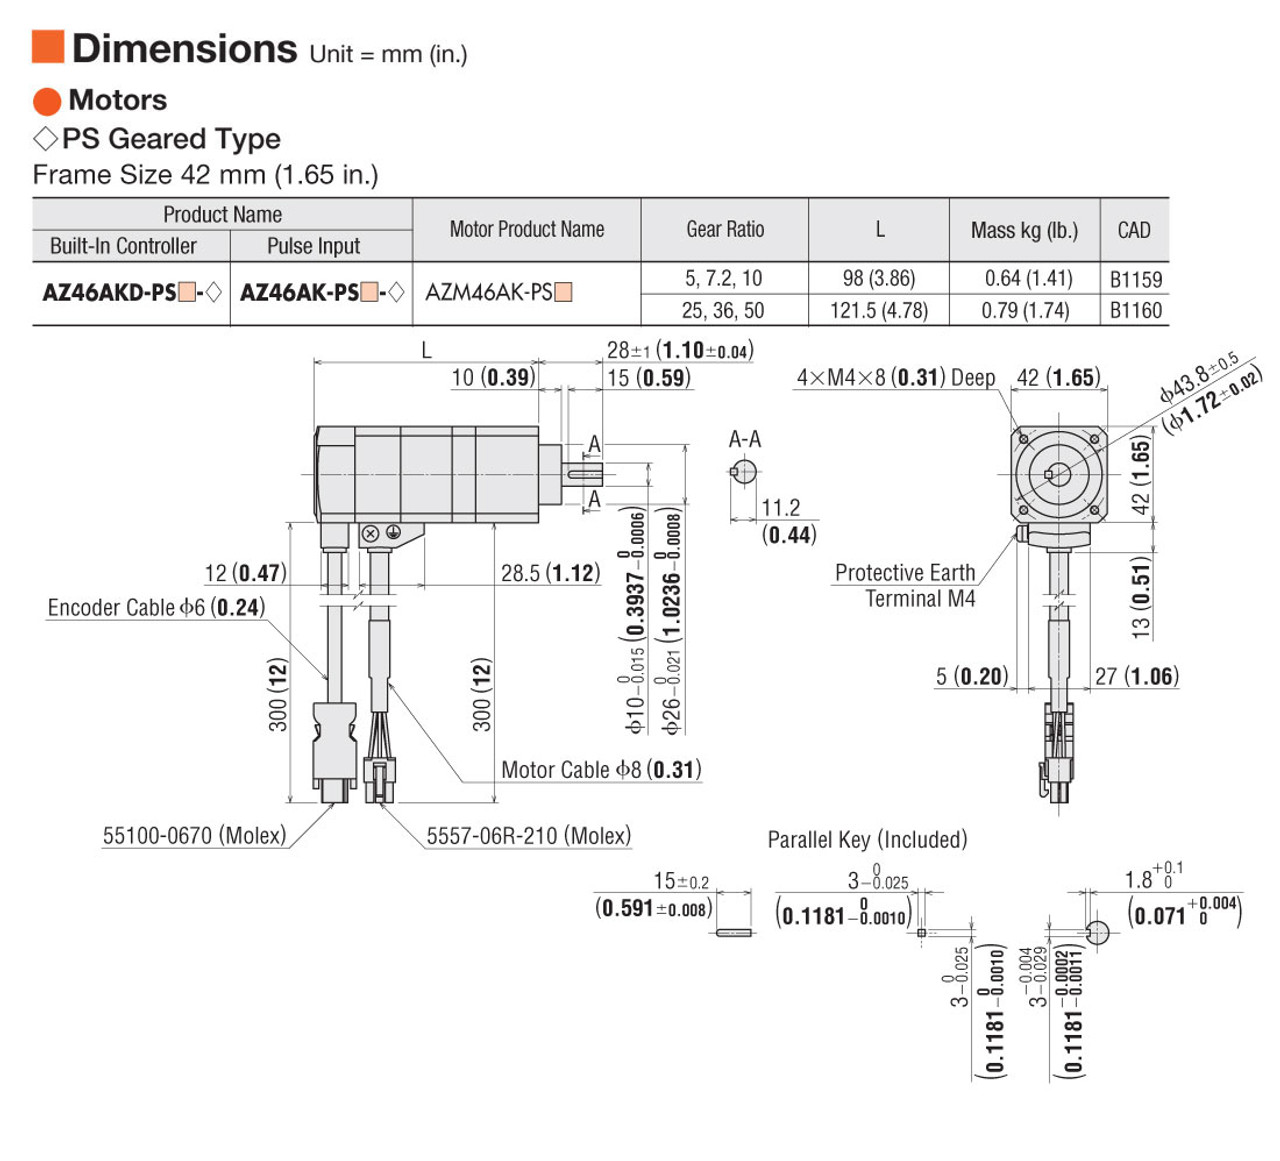 AZ46AKD-PS5 - Dimensions